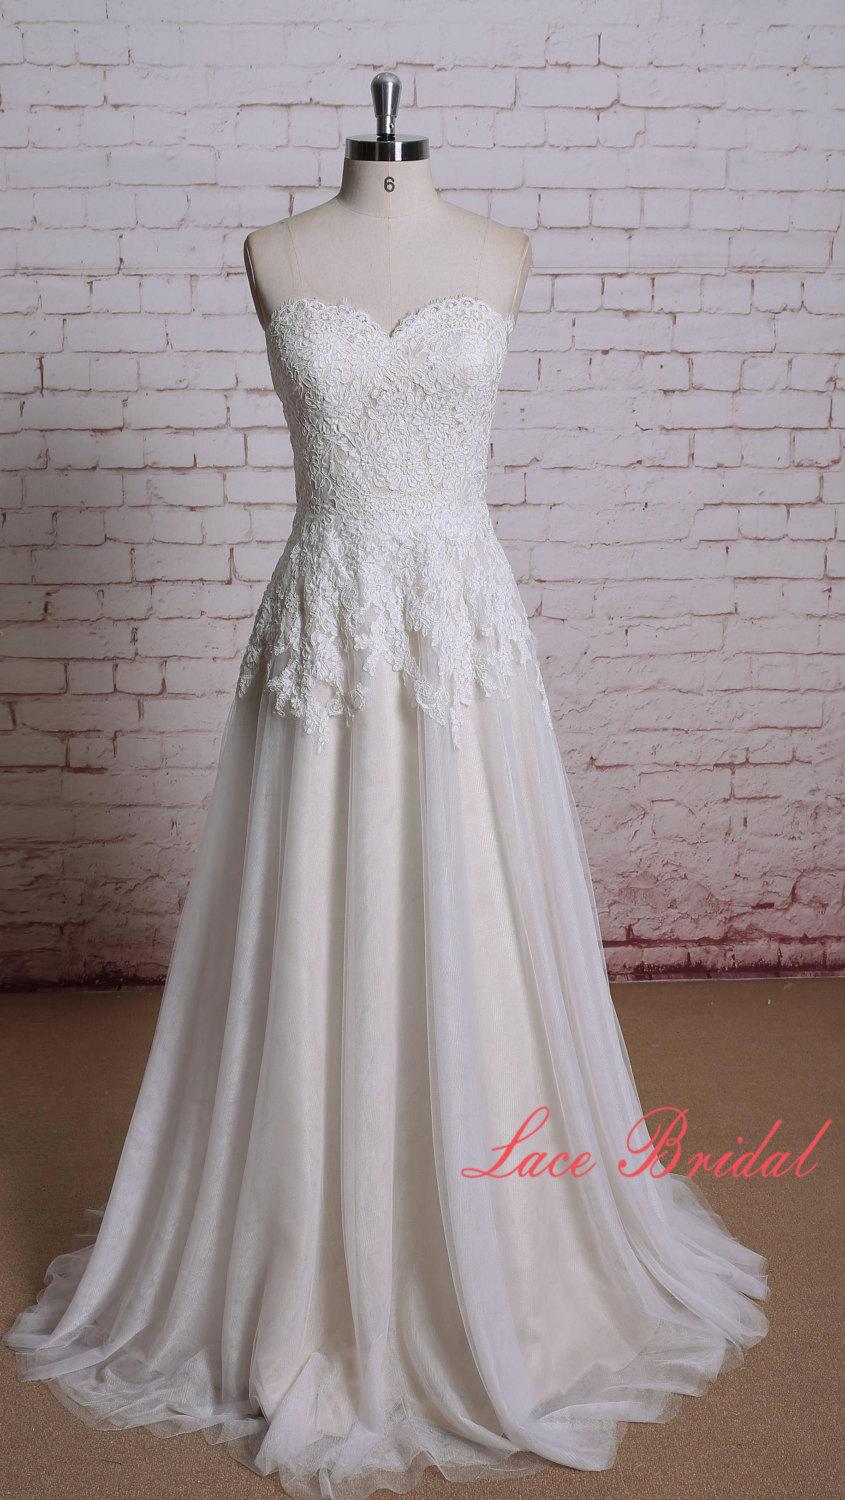 زفاف - Wedding dress of Sweetheart Neckline Ivory Color Lace with Champange underlay Bridal Gown A-line Wedding Dress with Sweep Train